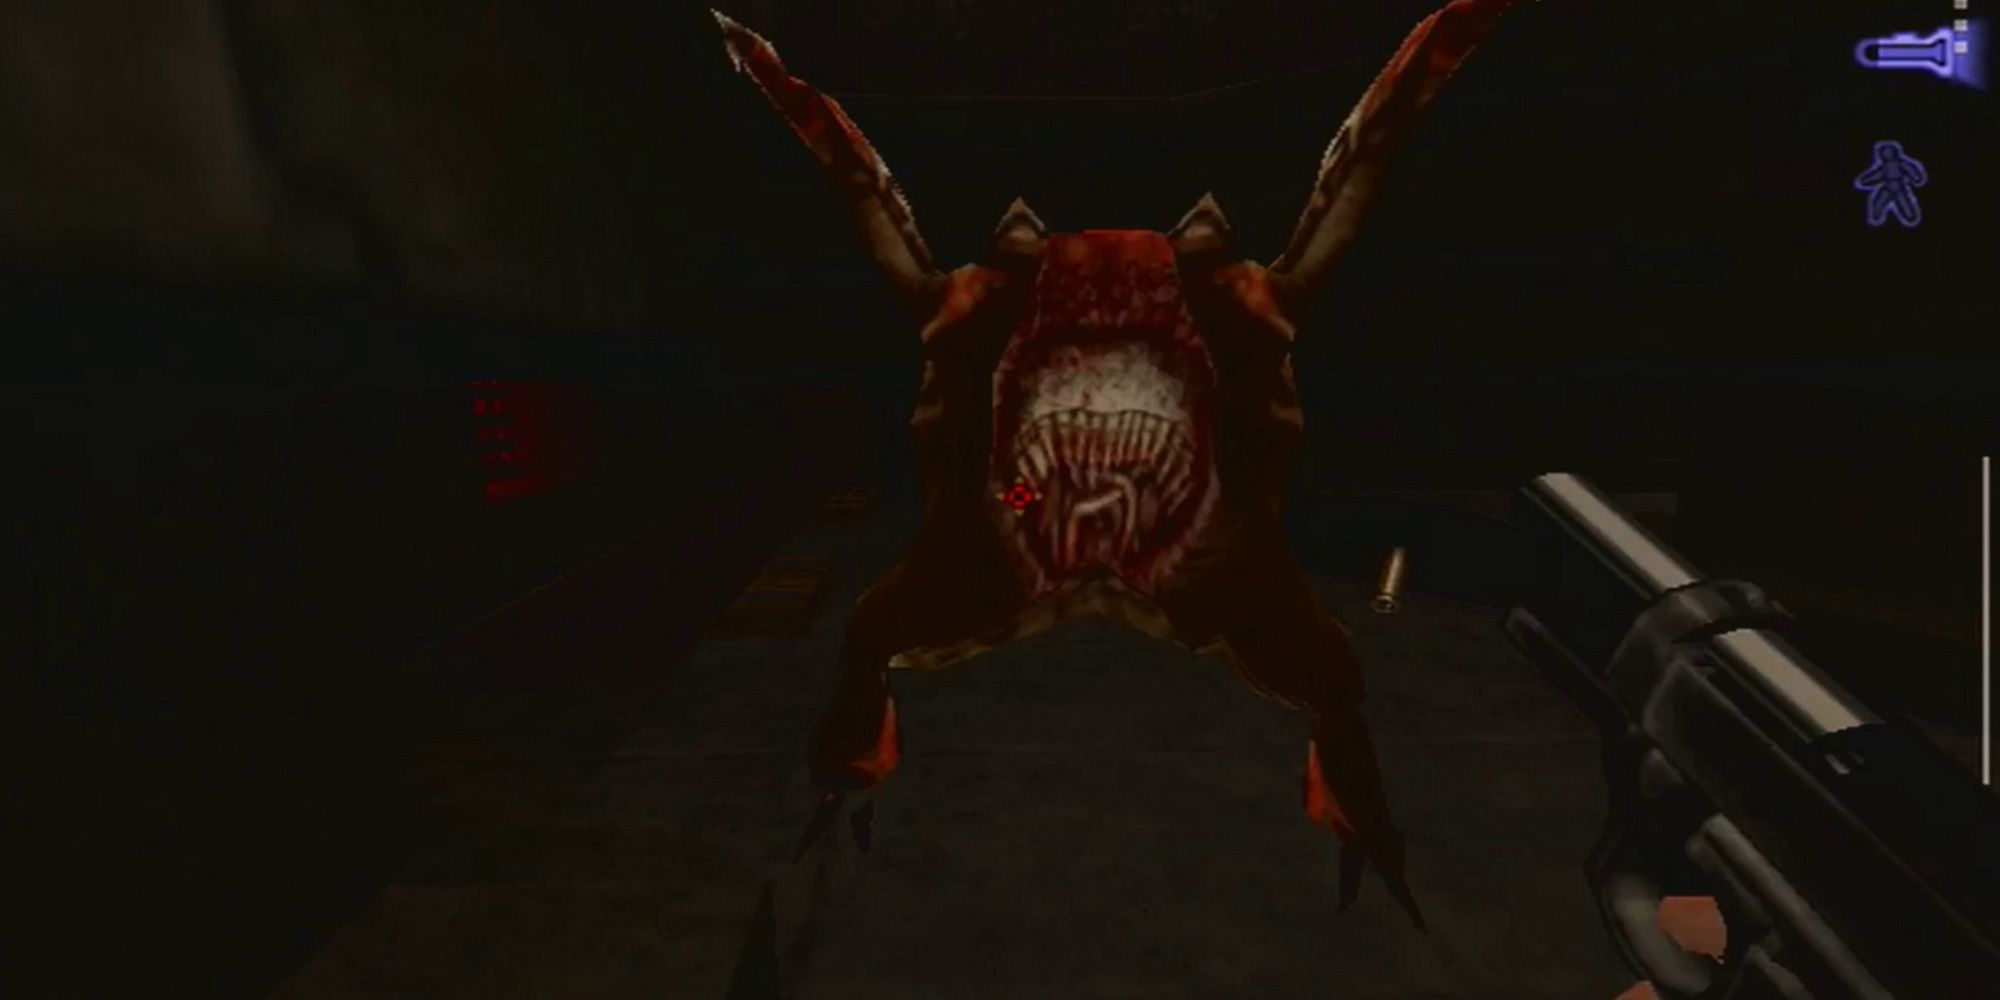 Half-Life Blue Shift - A headcrab attacks Barney, baring its teeth